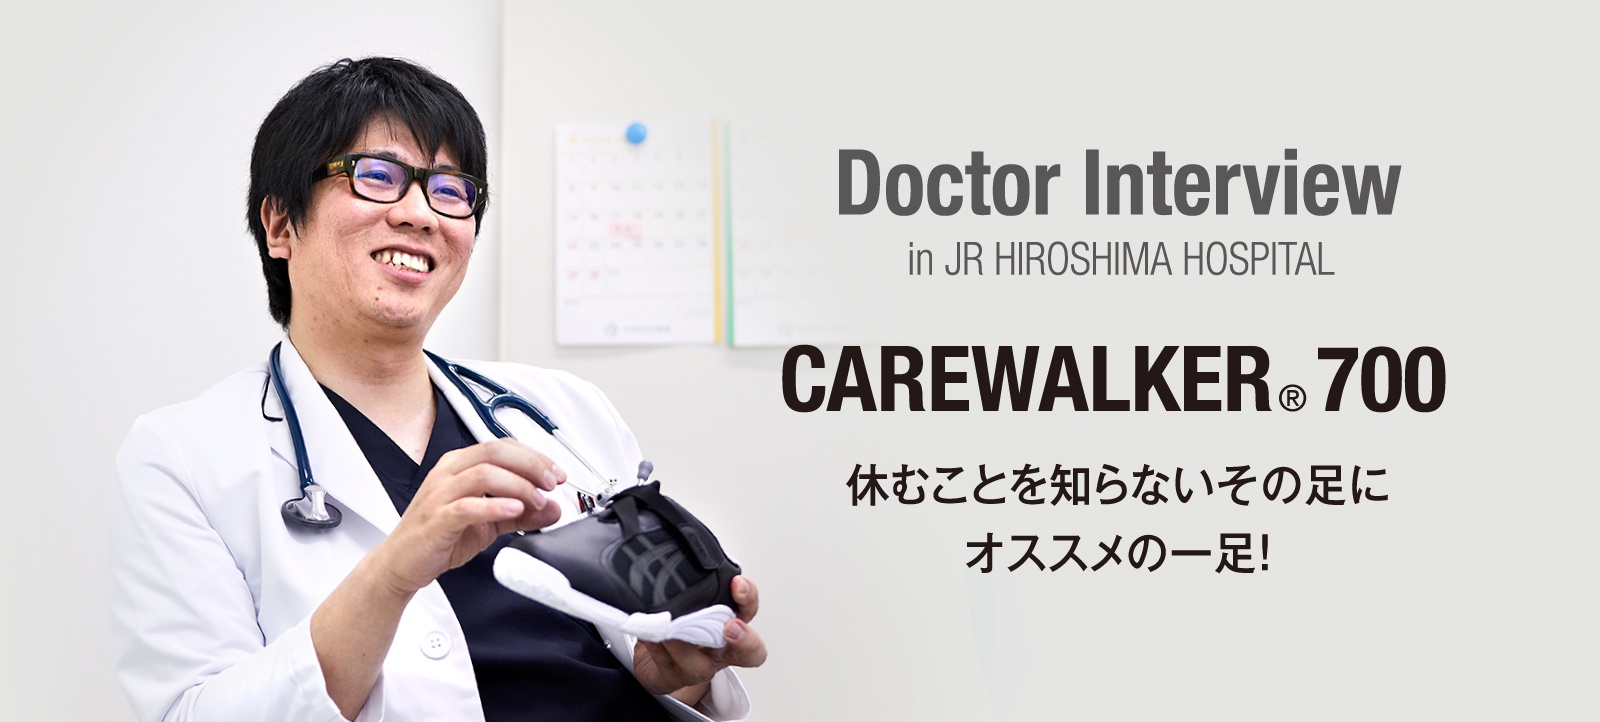 Doctor Interview CAREWALKER® 700